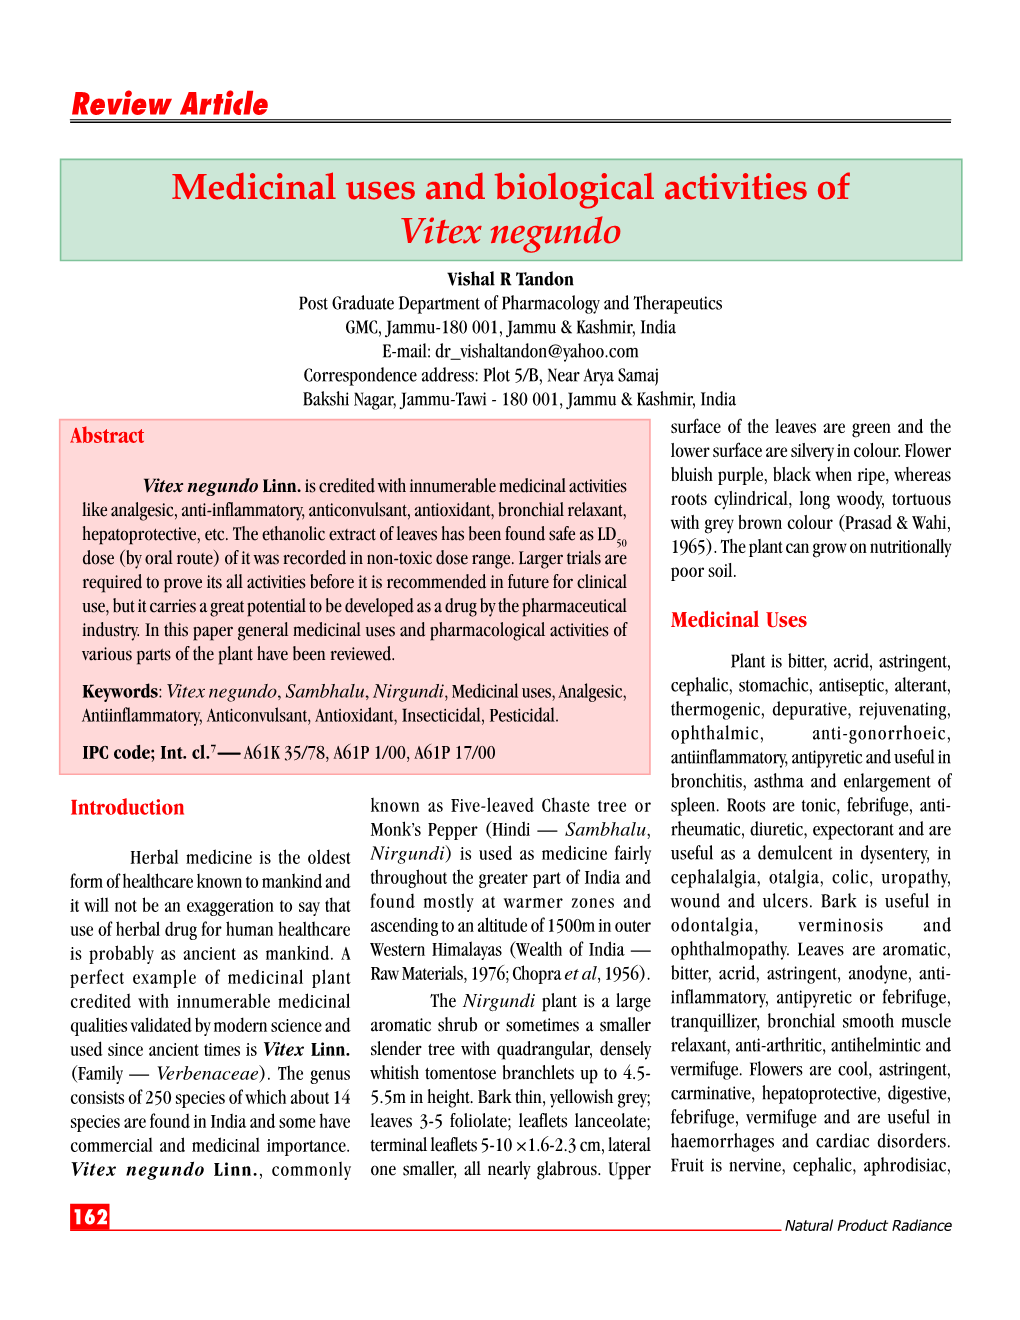 Medicinal Uses and Biological Activities of Vitex Negundo